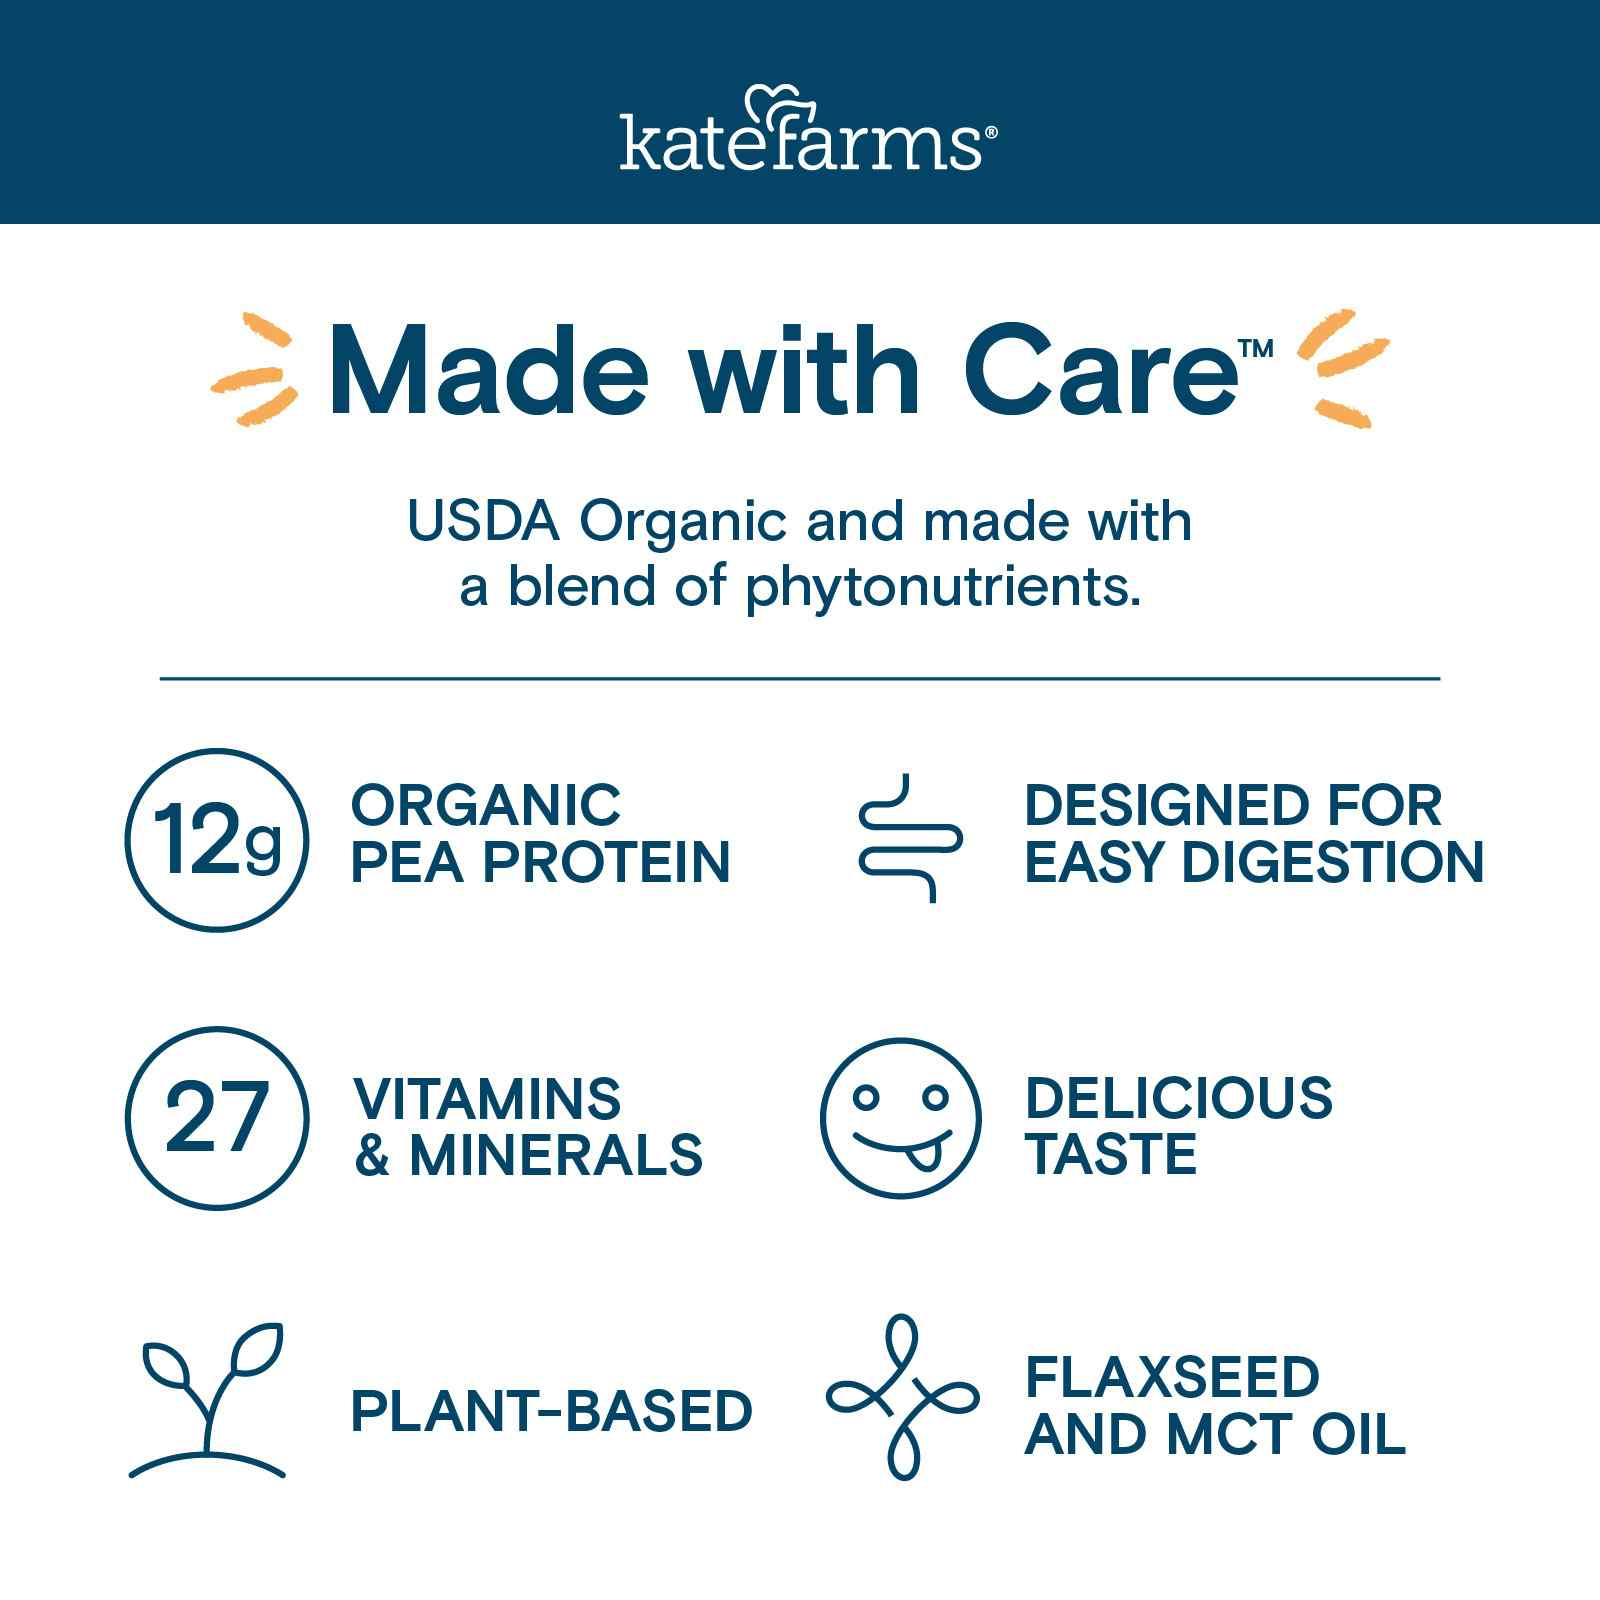 Kate Farms Pediatric Standard 1.2 Sole-Source Nutrition Formula, 8.5 oz.